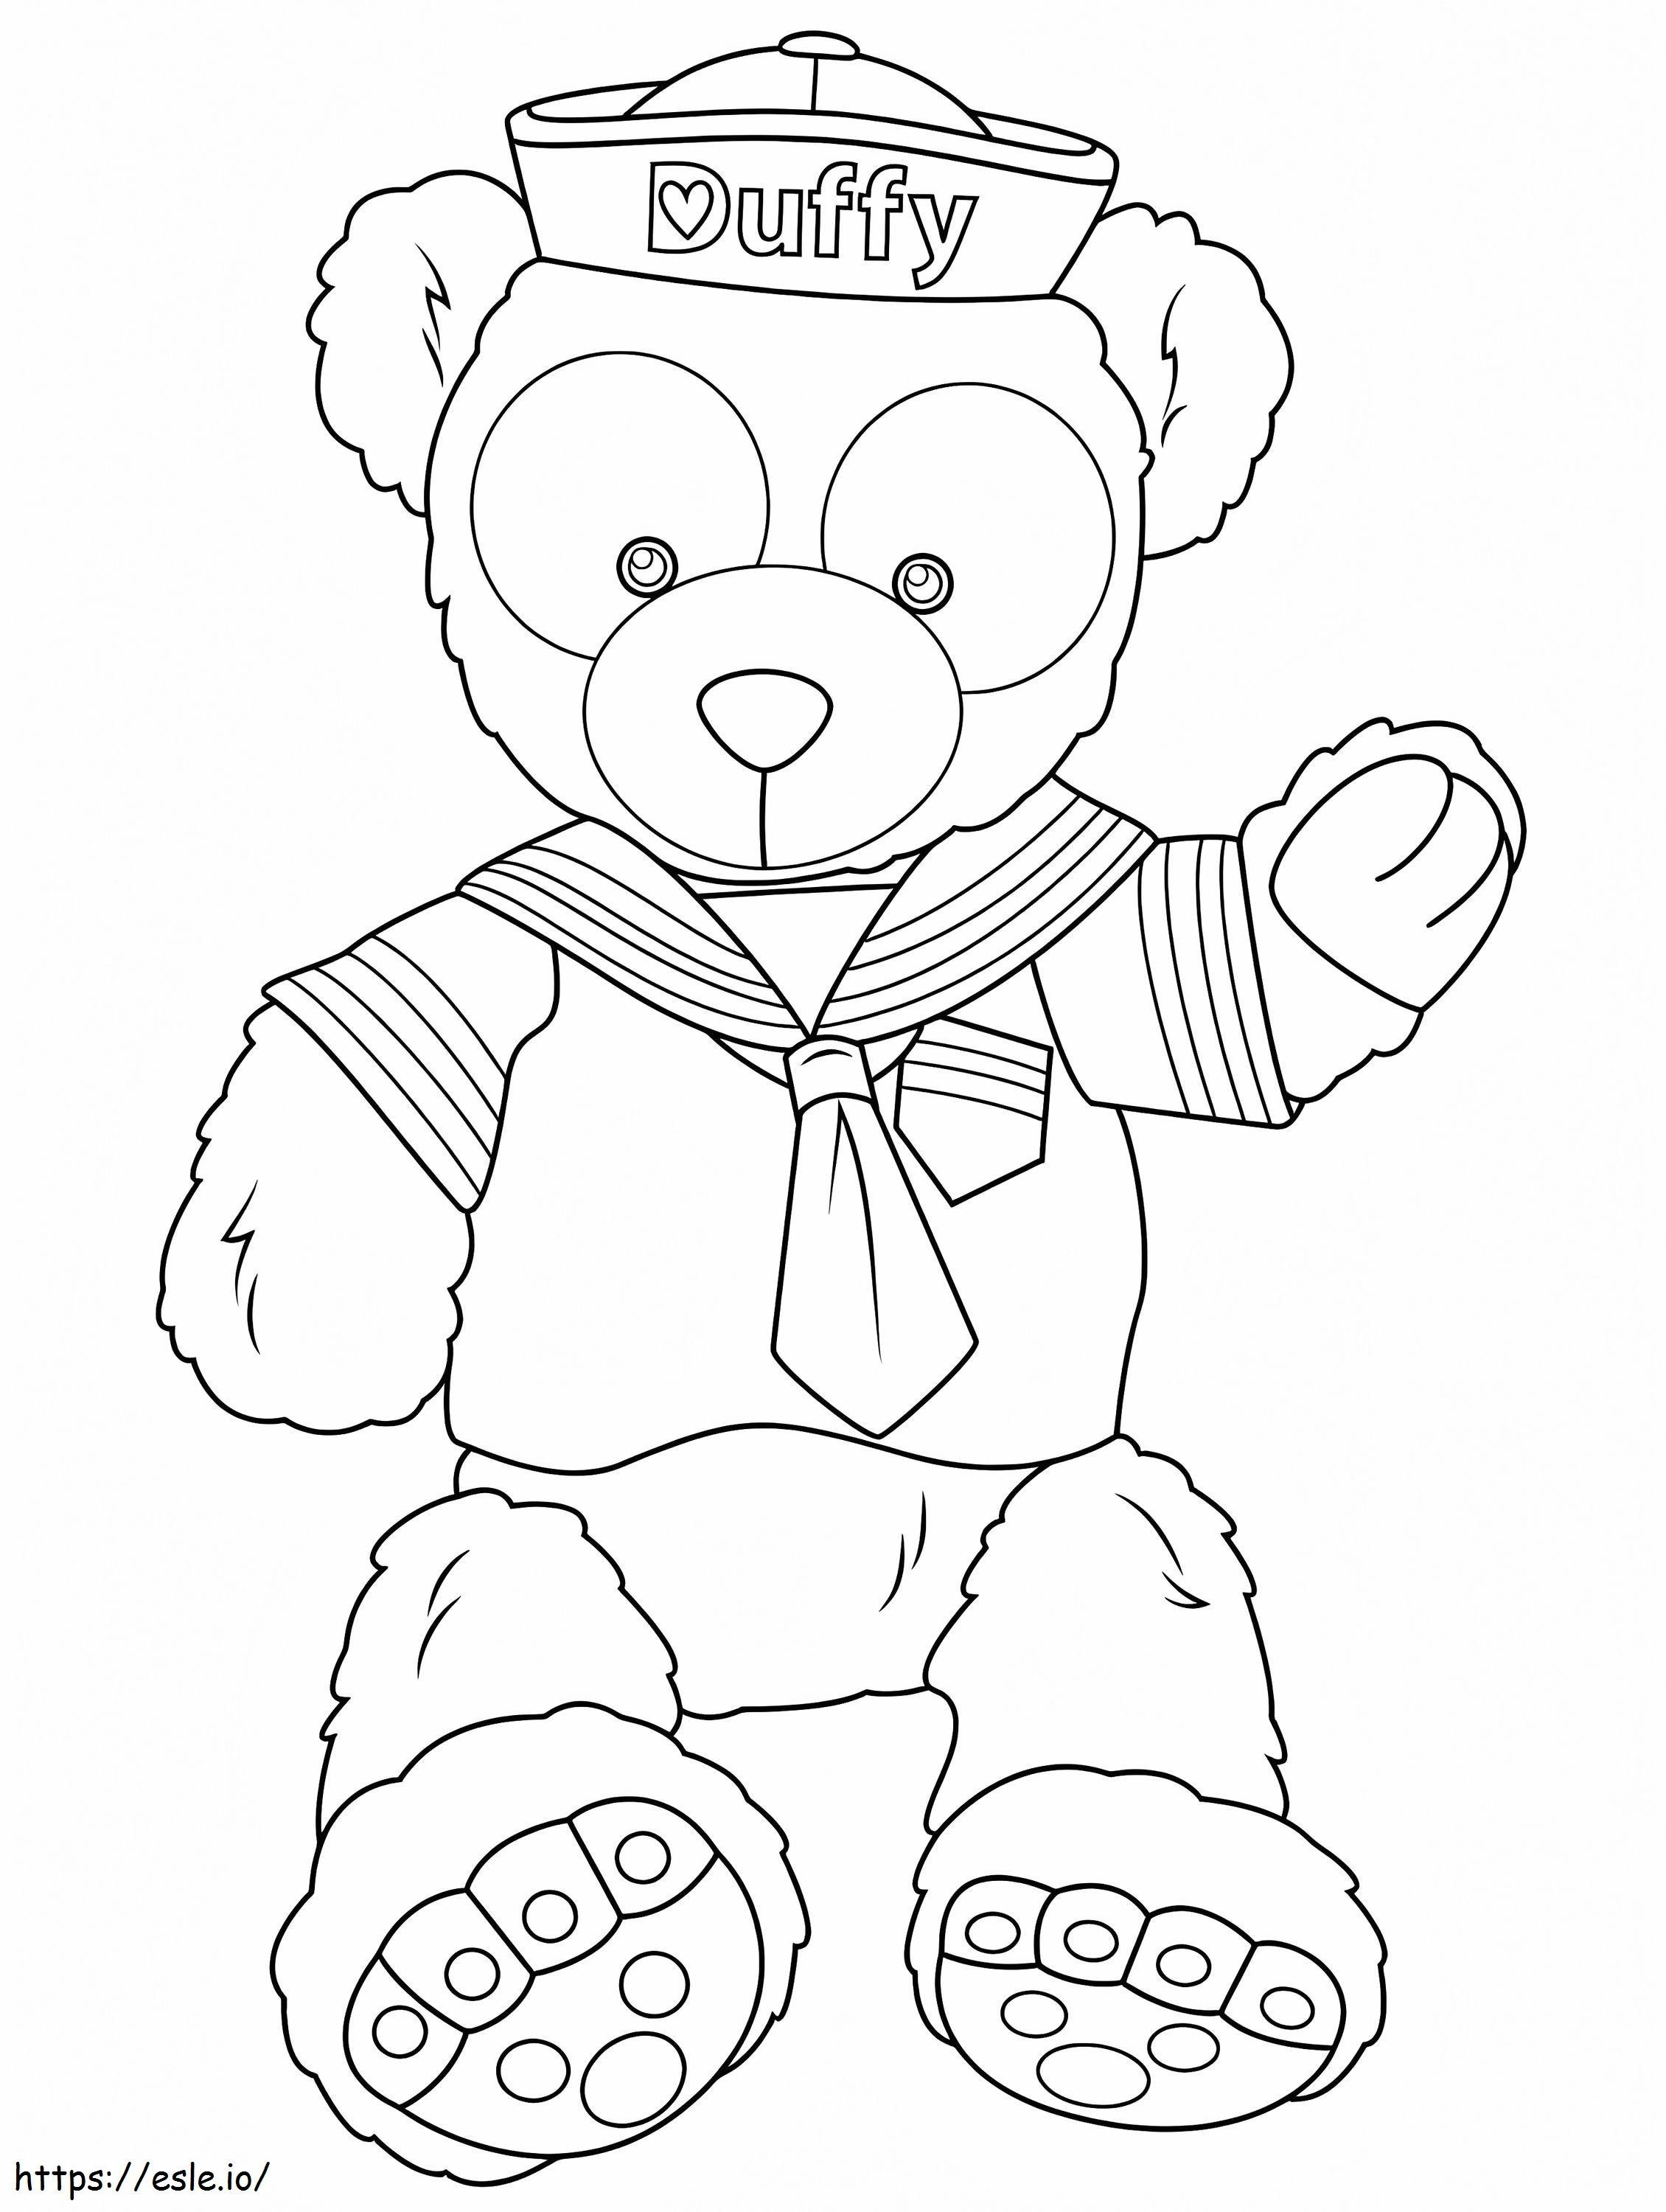 Sailor Teddy Bear coloring page